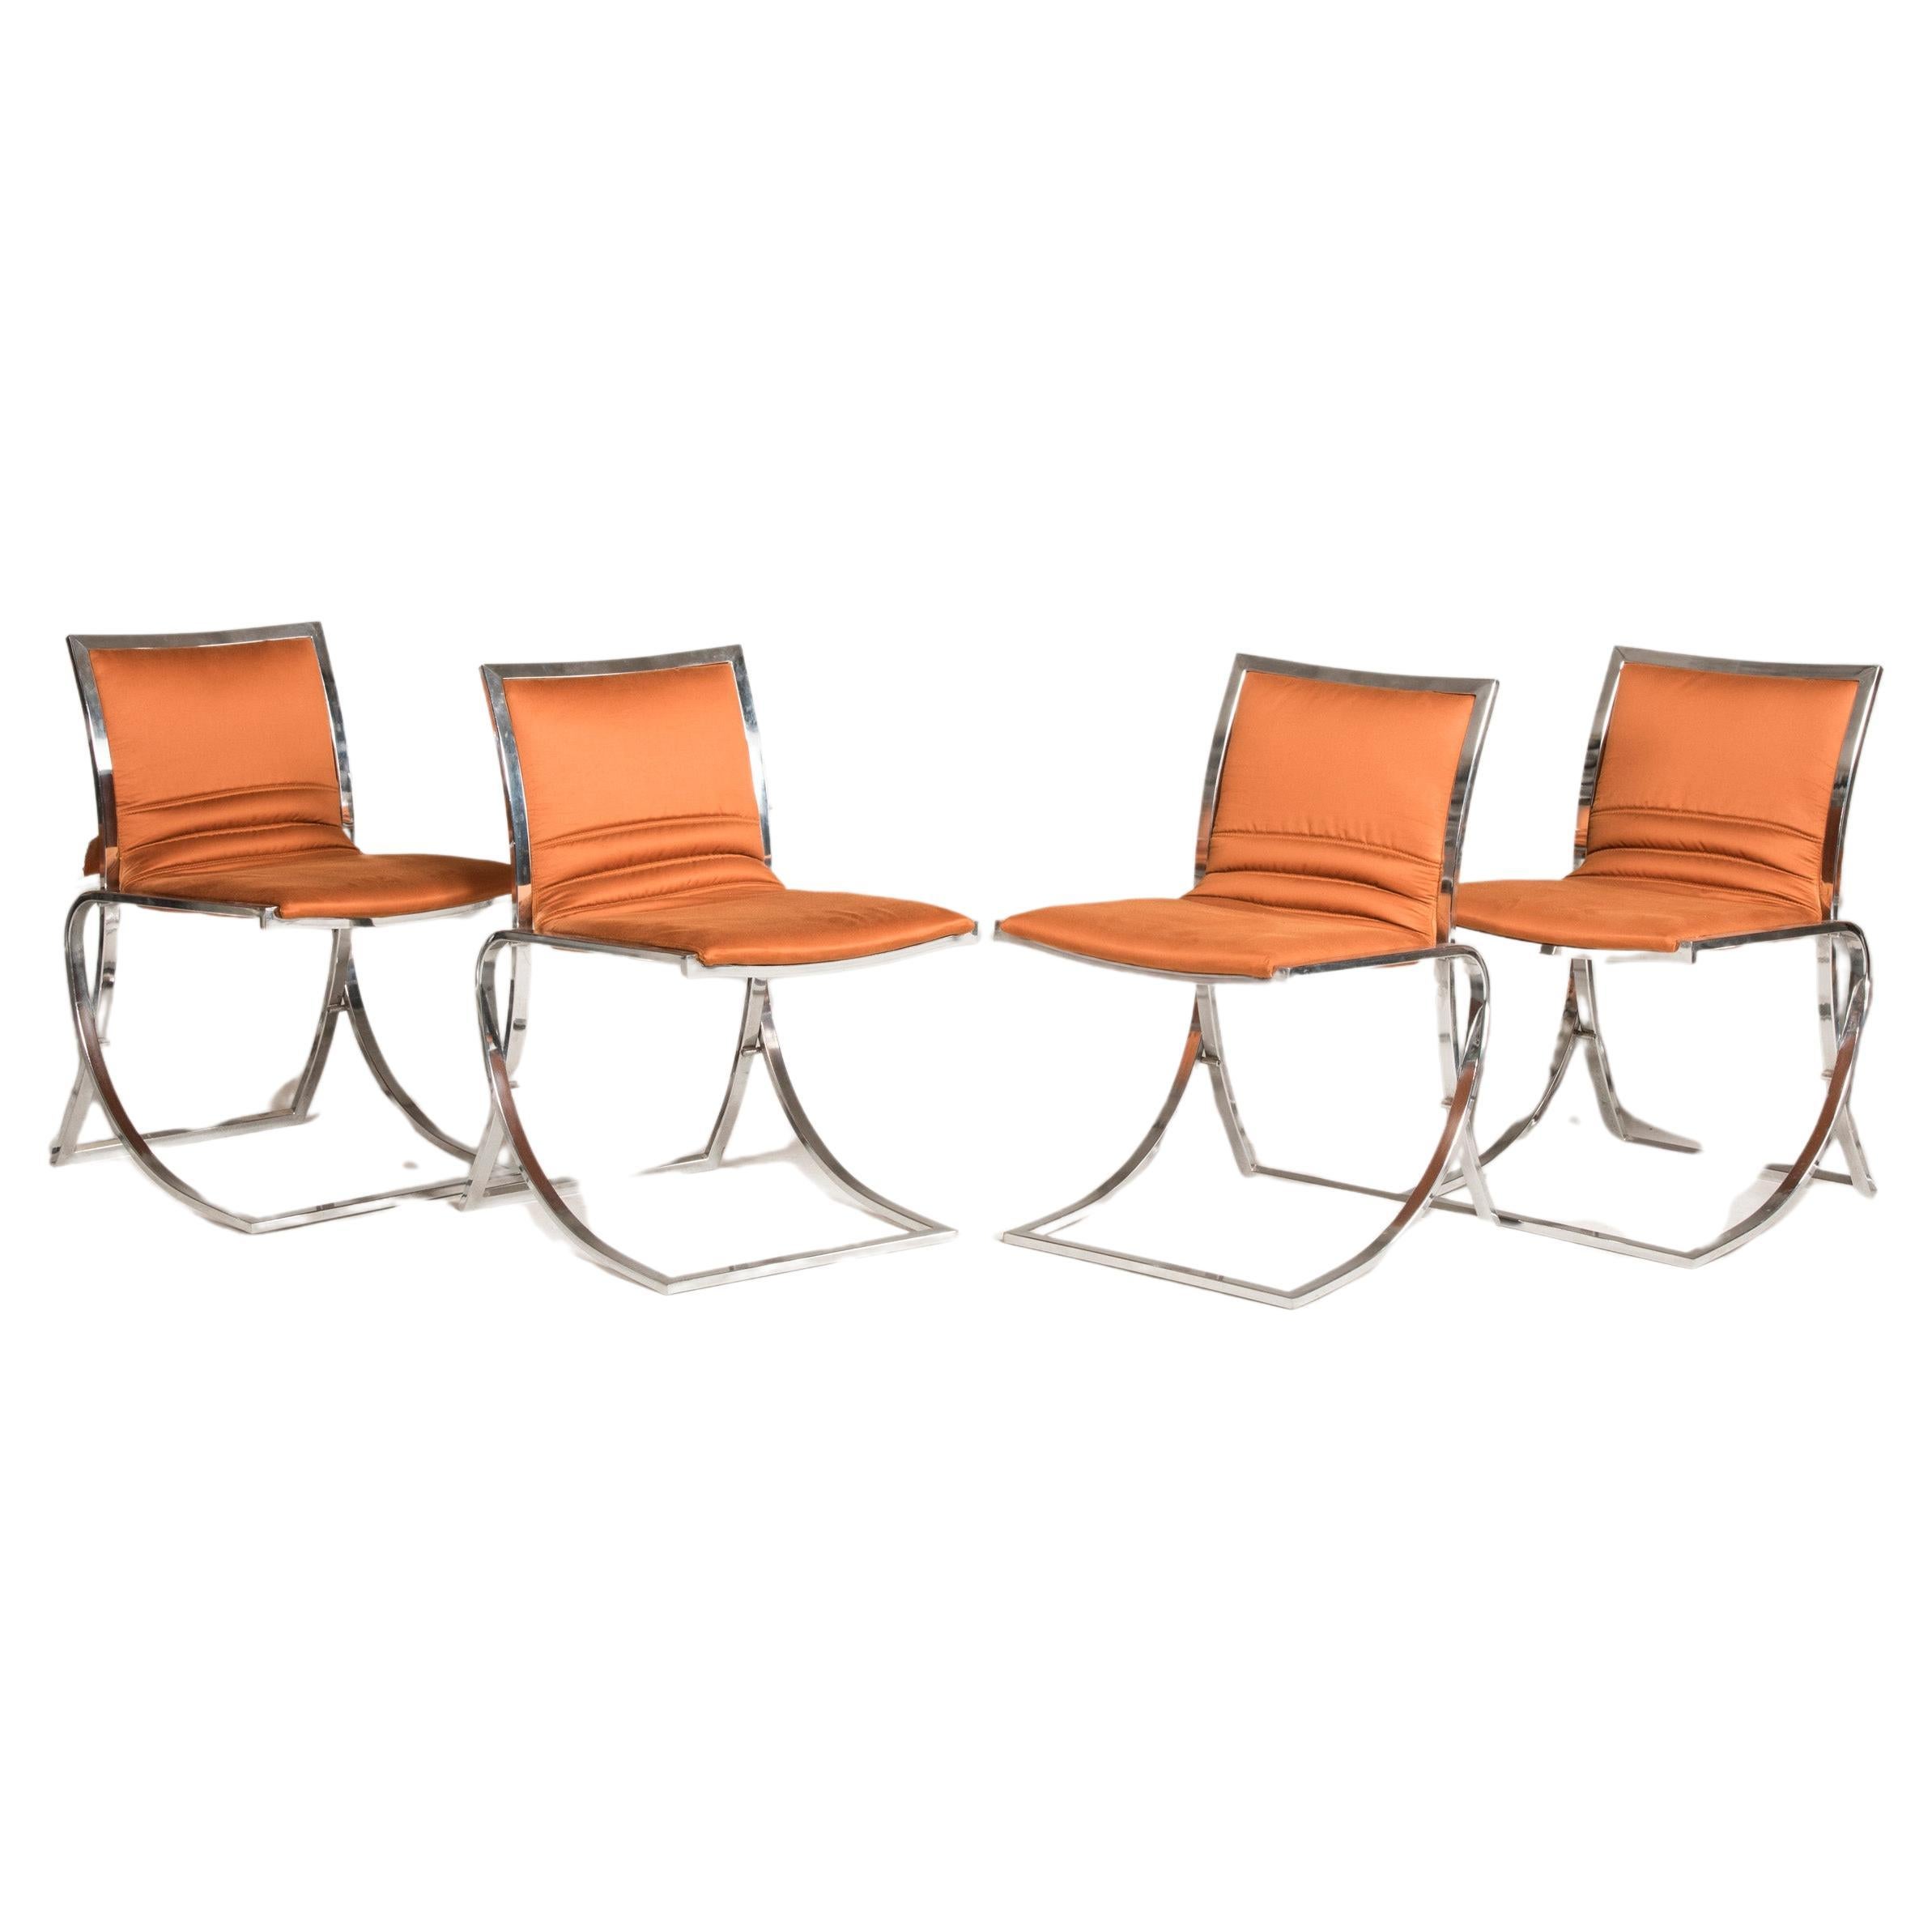 1970s Orange Upholstery Chromed Steel Chairs Set of 4